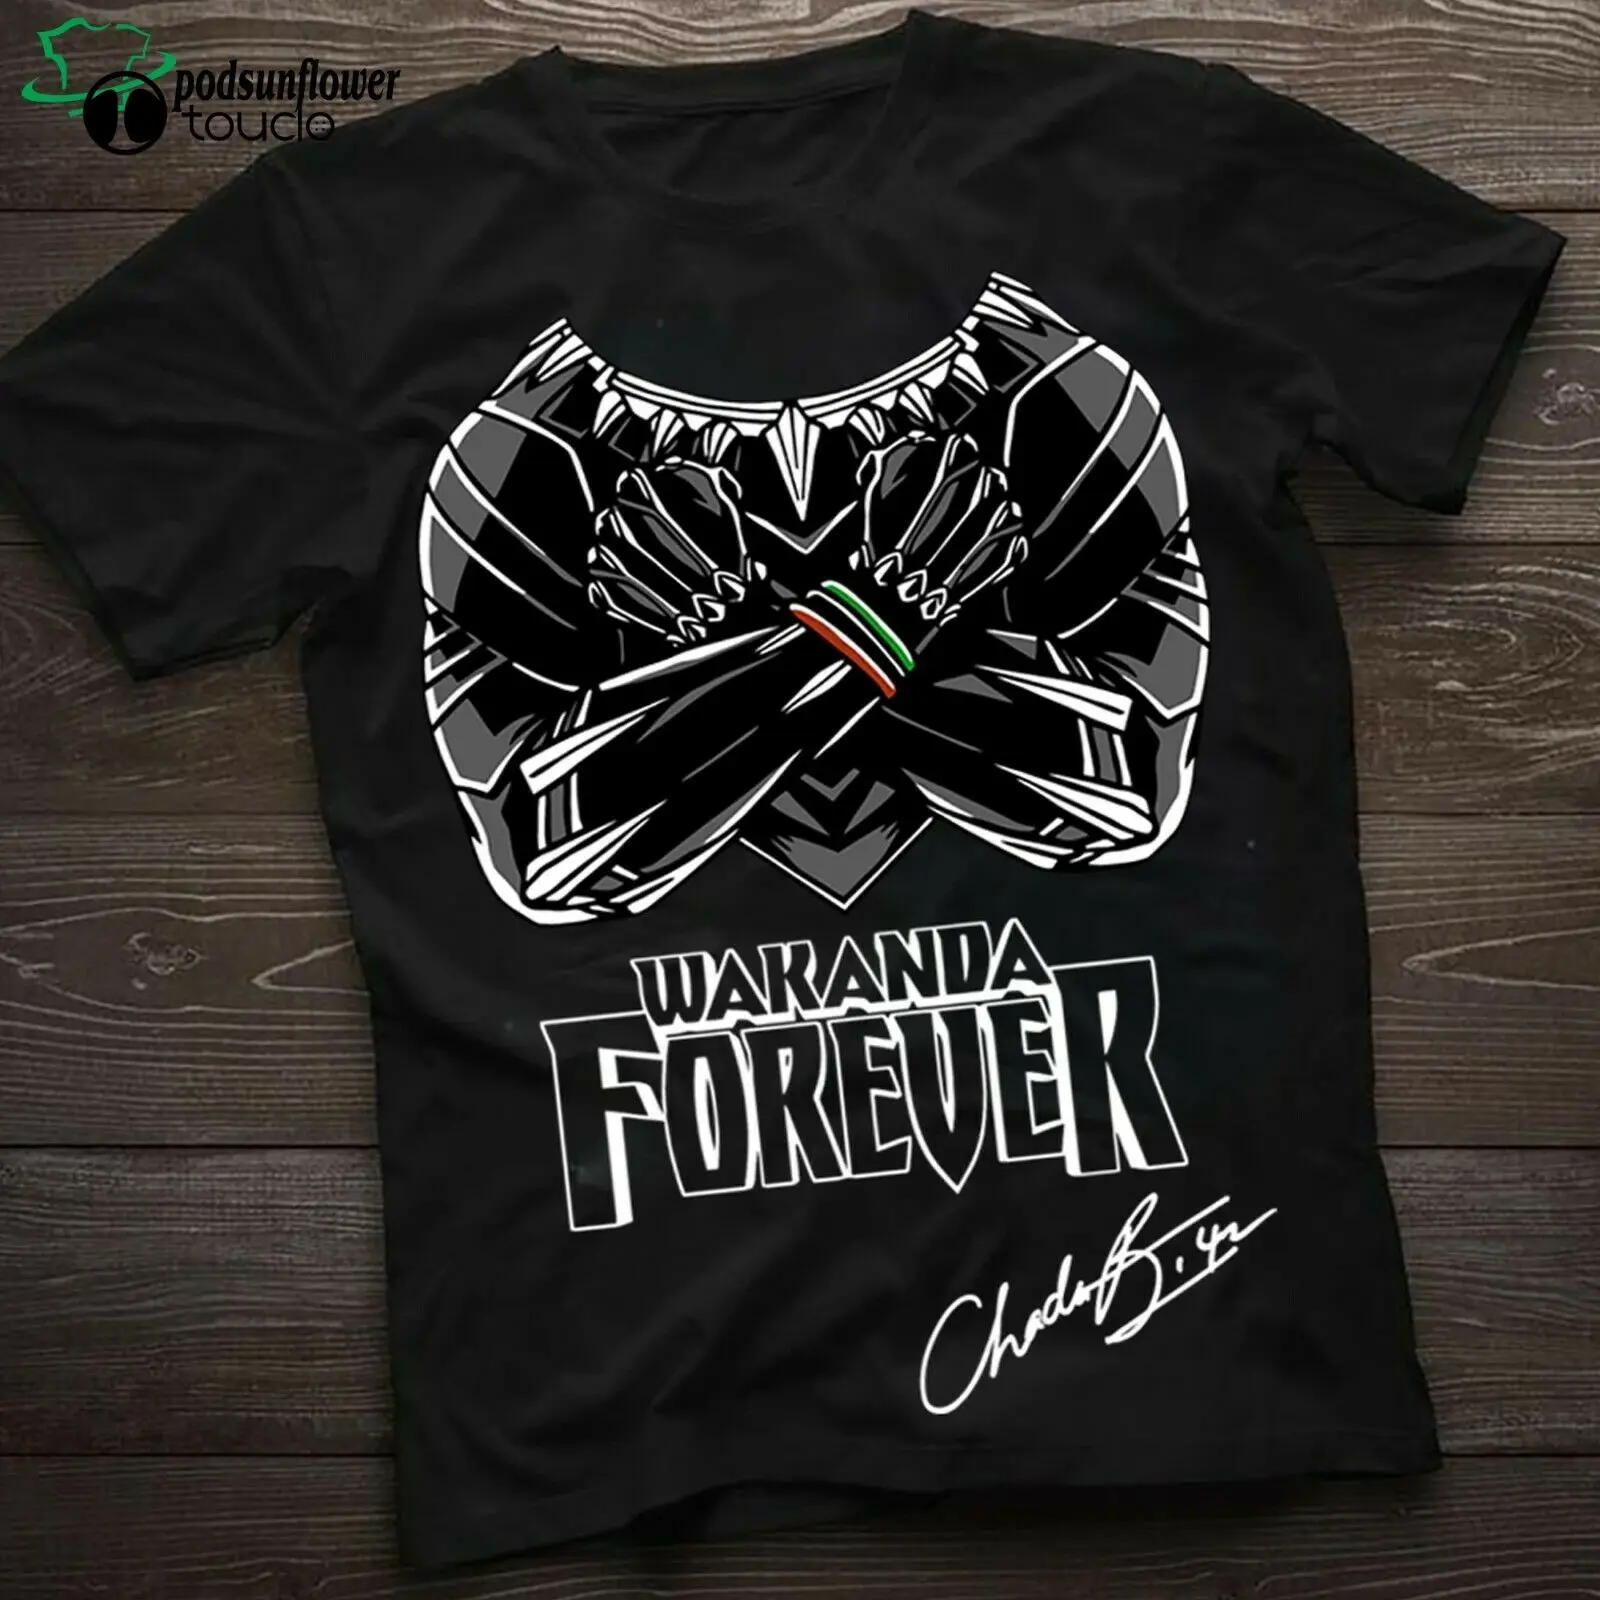 

T-Shirt Men Panther Rip Chadwick Boseman Wakanda Forever Signature Shirt Custom Aldult Teen Unisex Digital Printing Tee Shirt